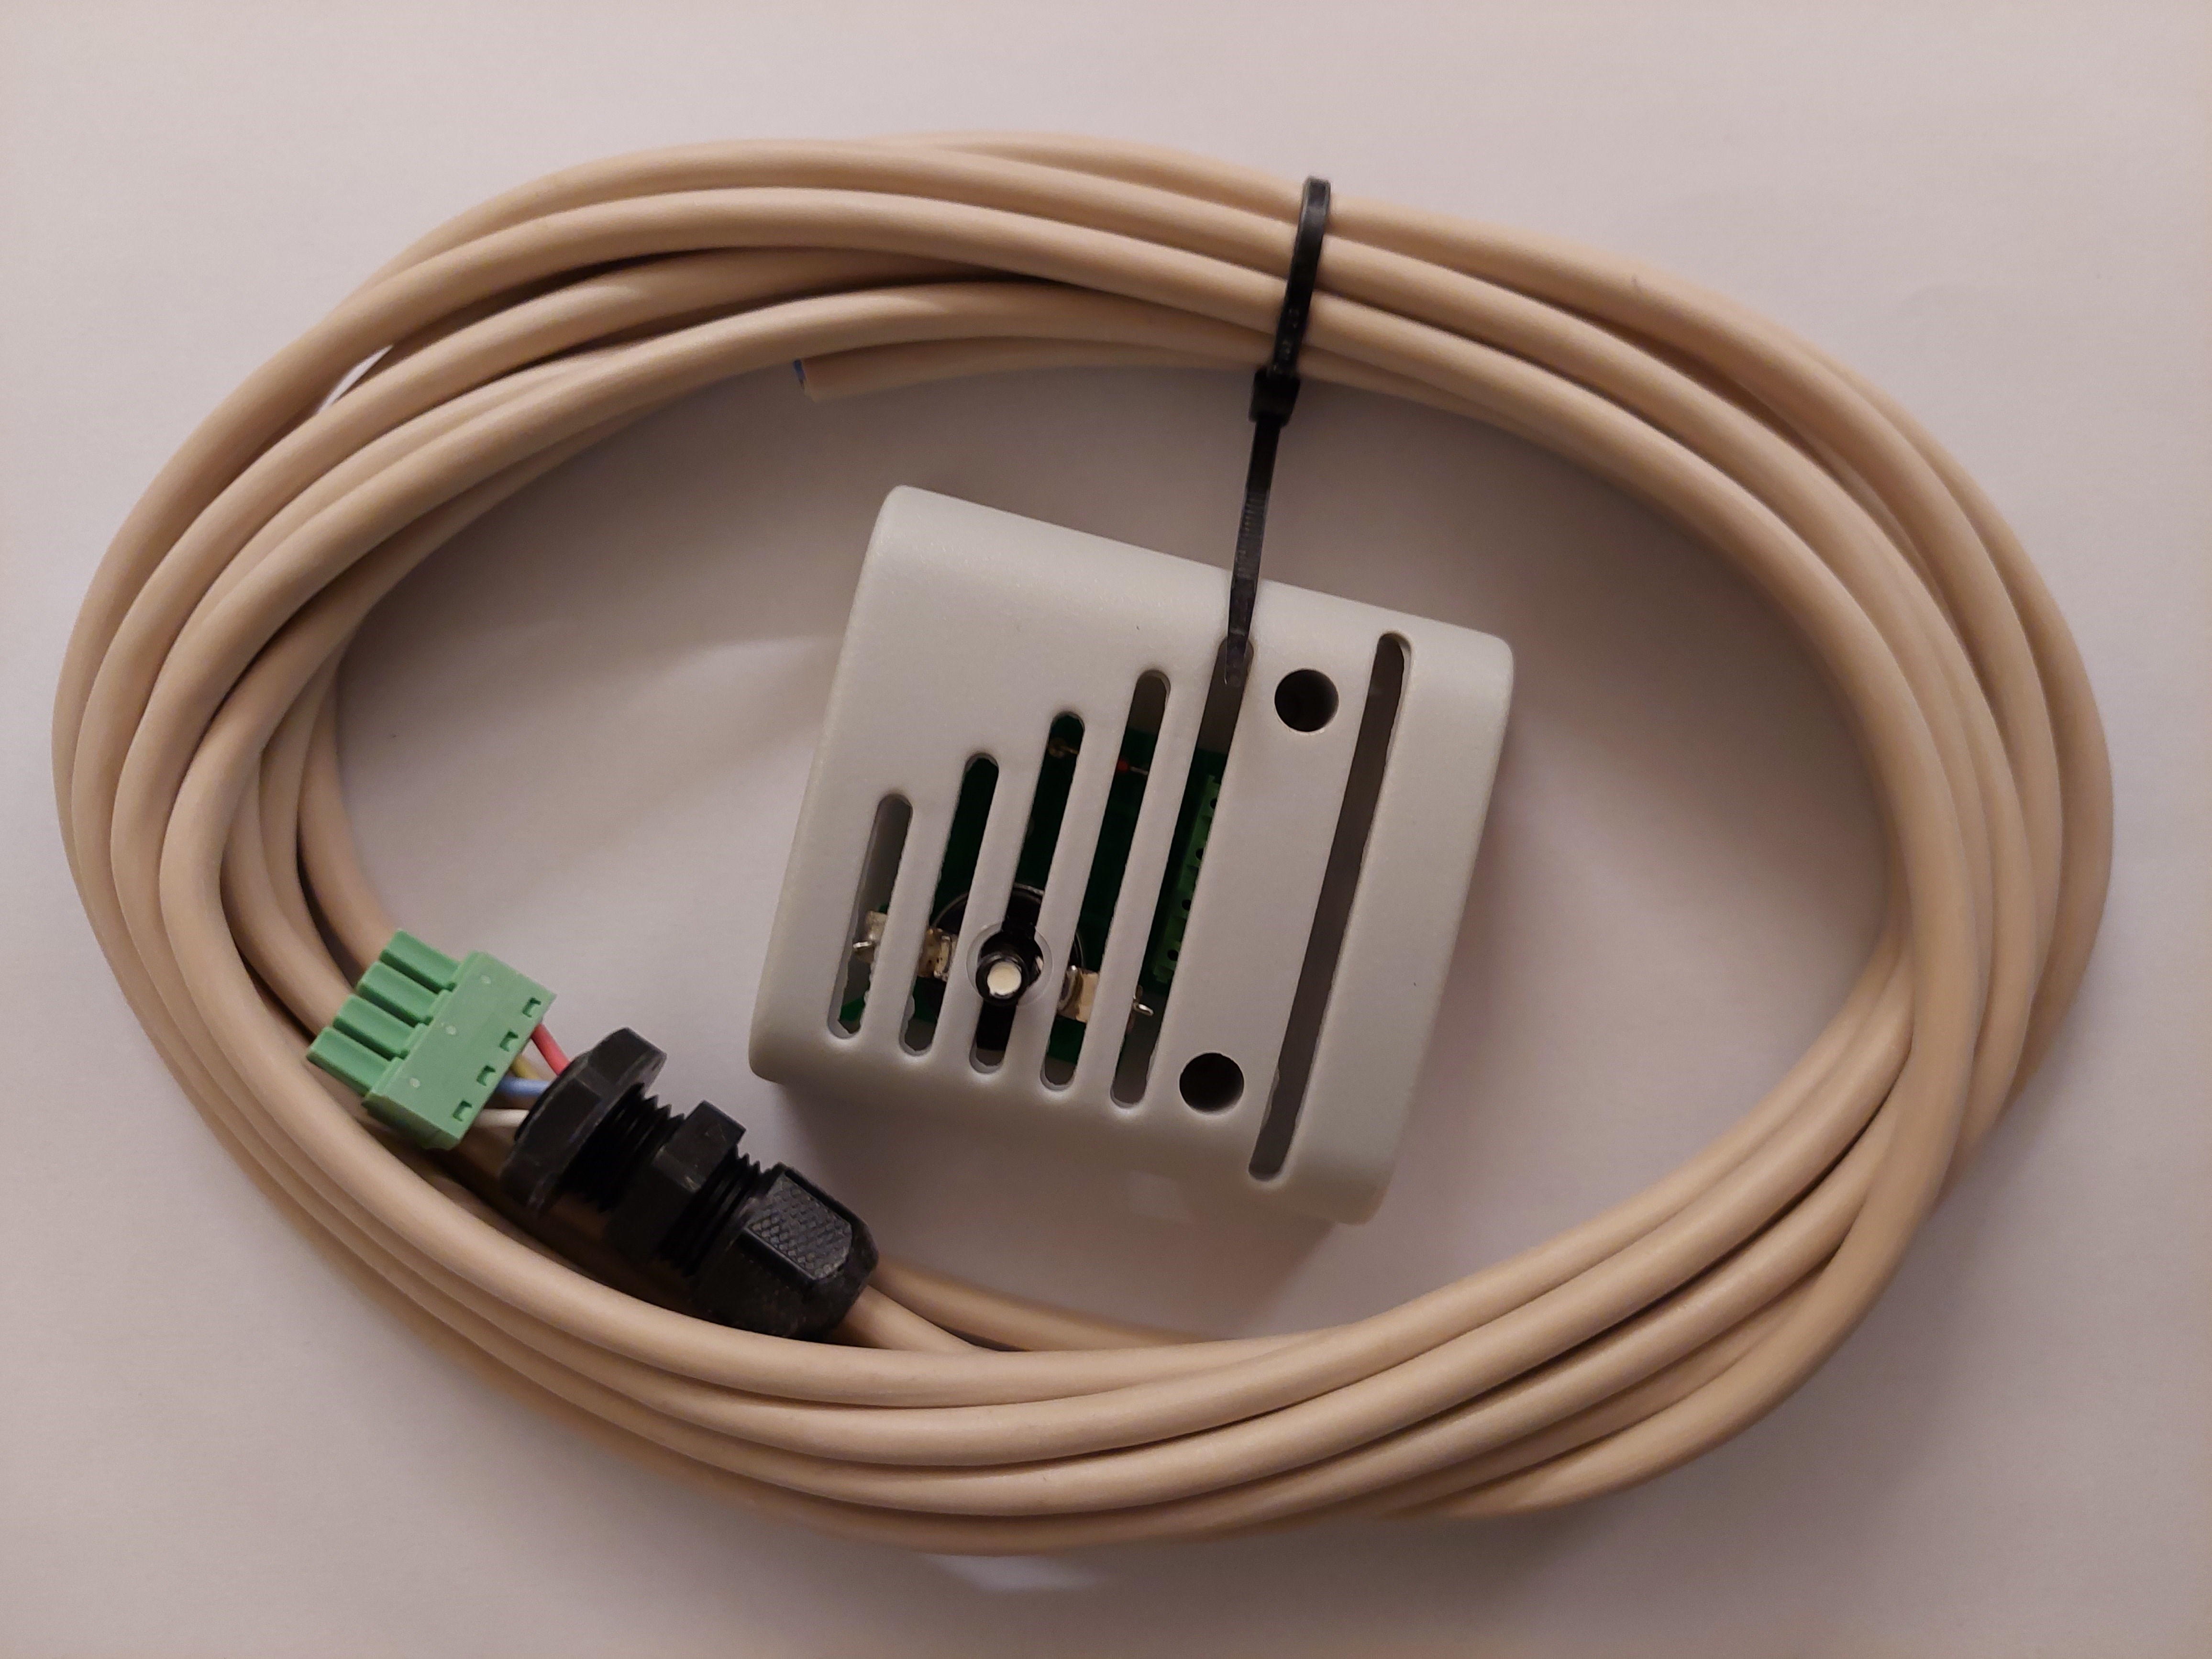 Narvi Temperatursensor inkl. 5m kabel